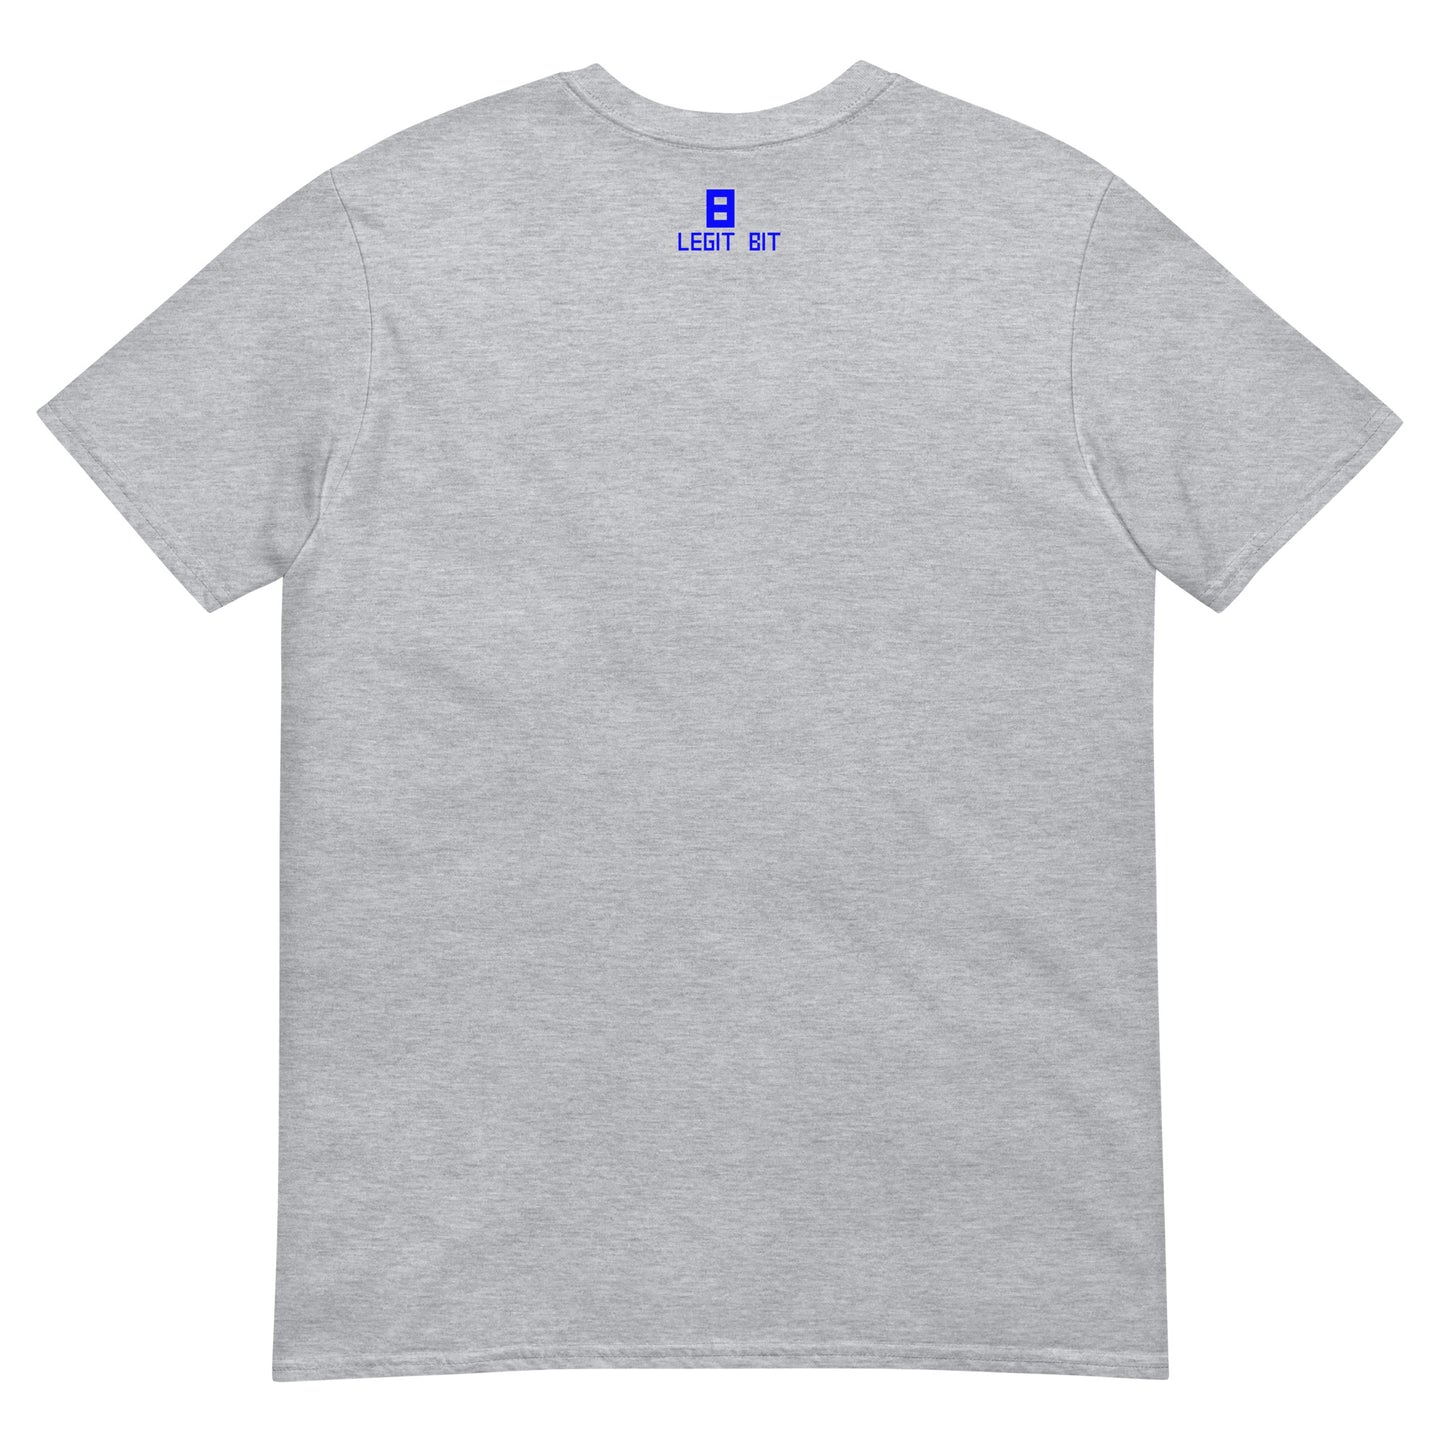 Cincinnati St. Xavier Pride Short-Sleeve Unisex T-Shirt